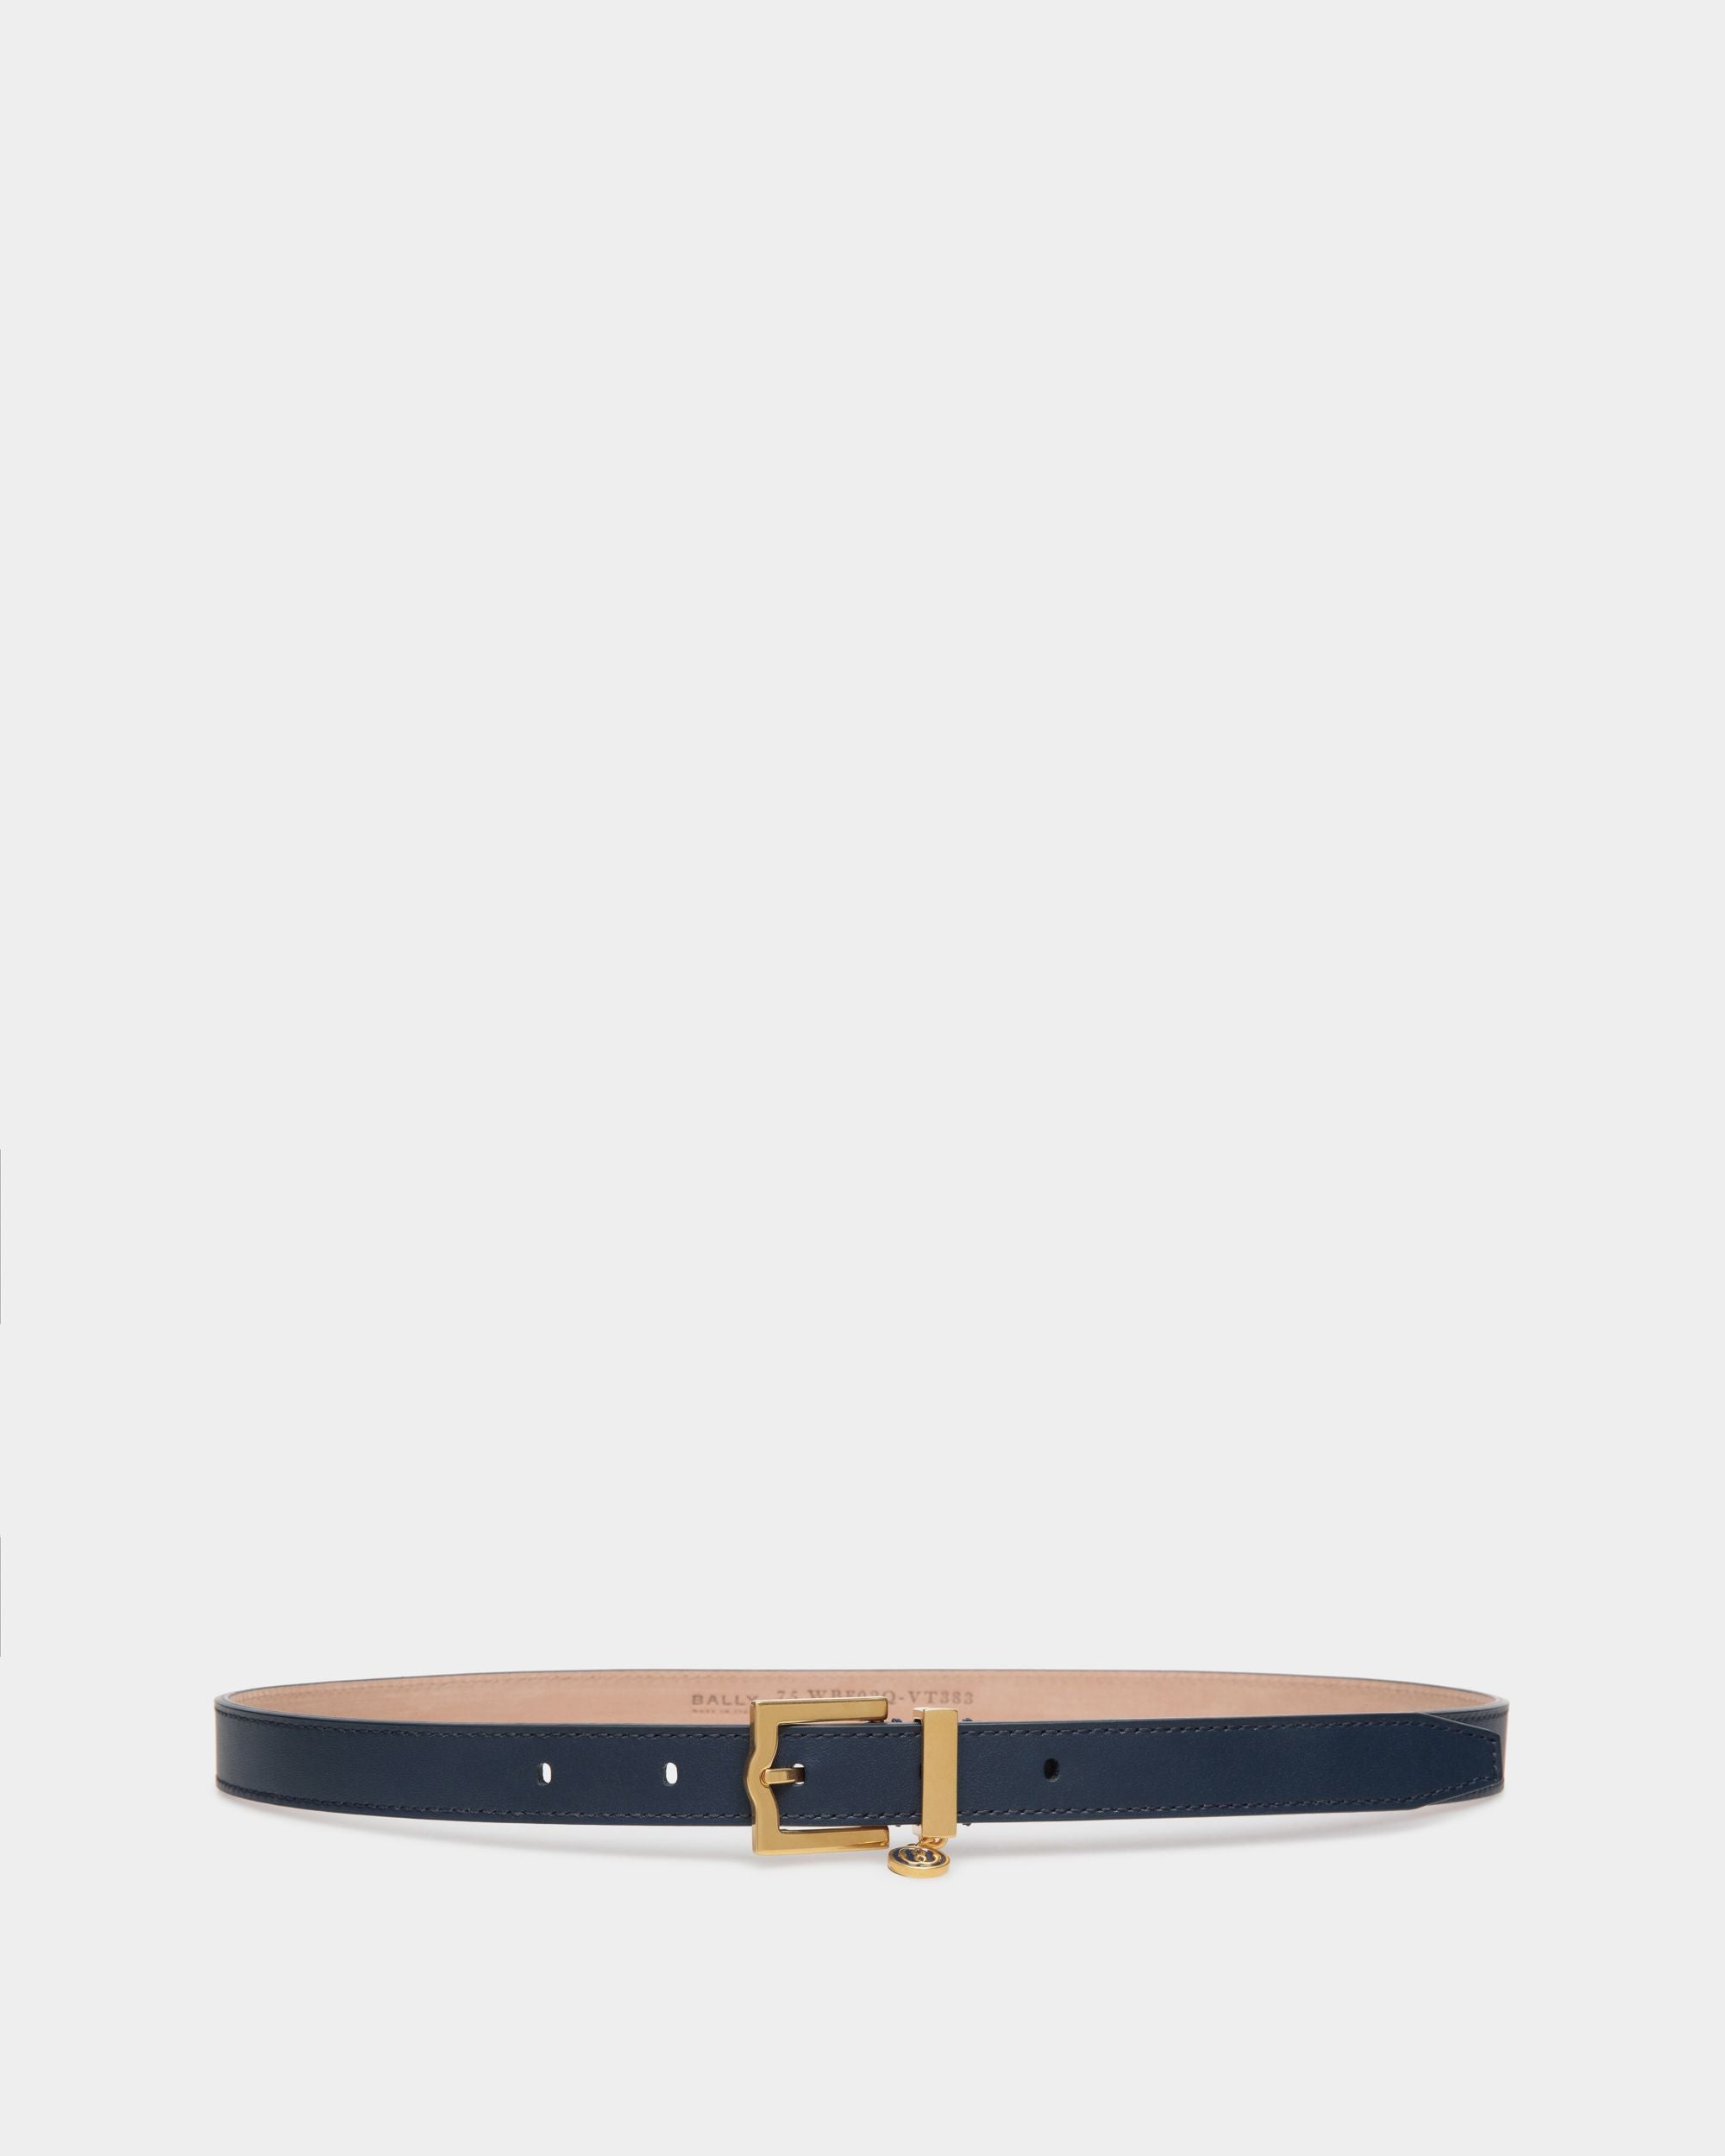 Emblem 20mm | Women's Belt in Blue Leather | Bally | Still Life Front